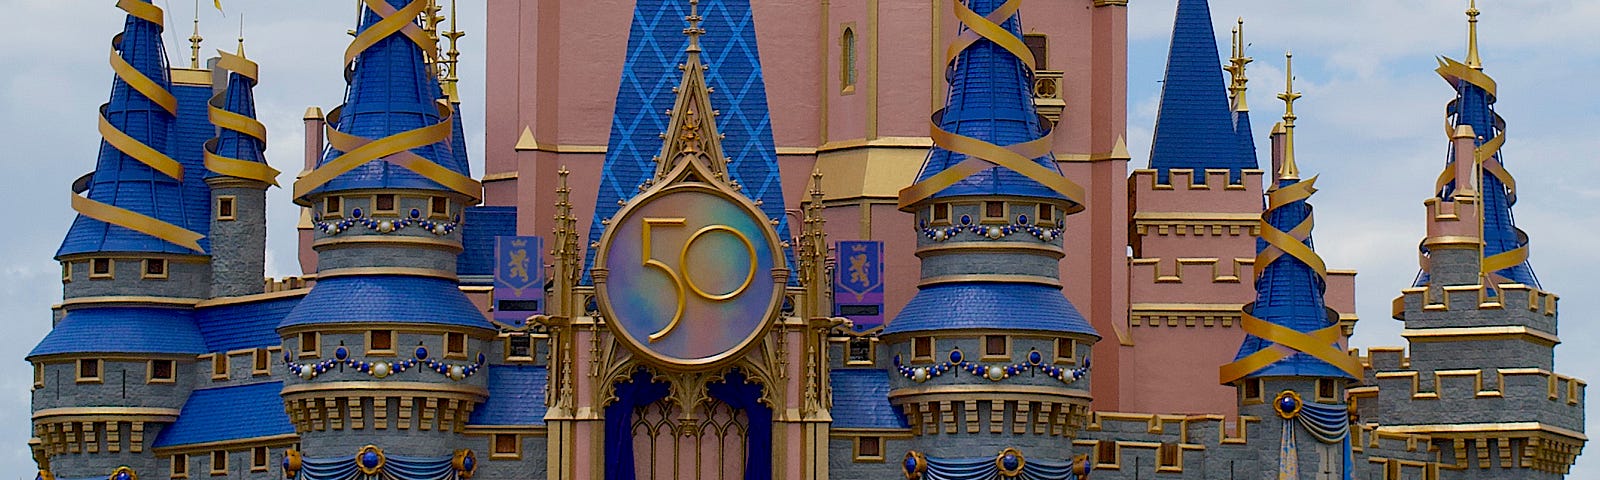 Photo of Cinderella Castle 50th Anniversary, Magic Kingdom by Craig Walls